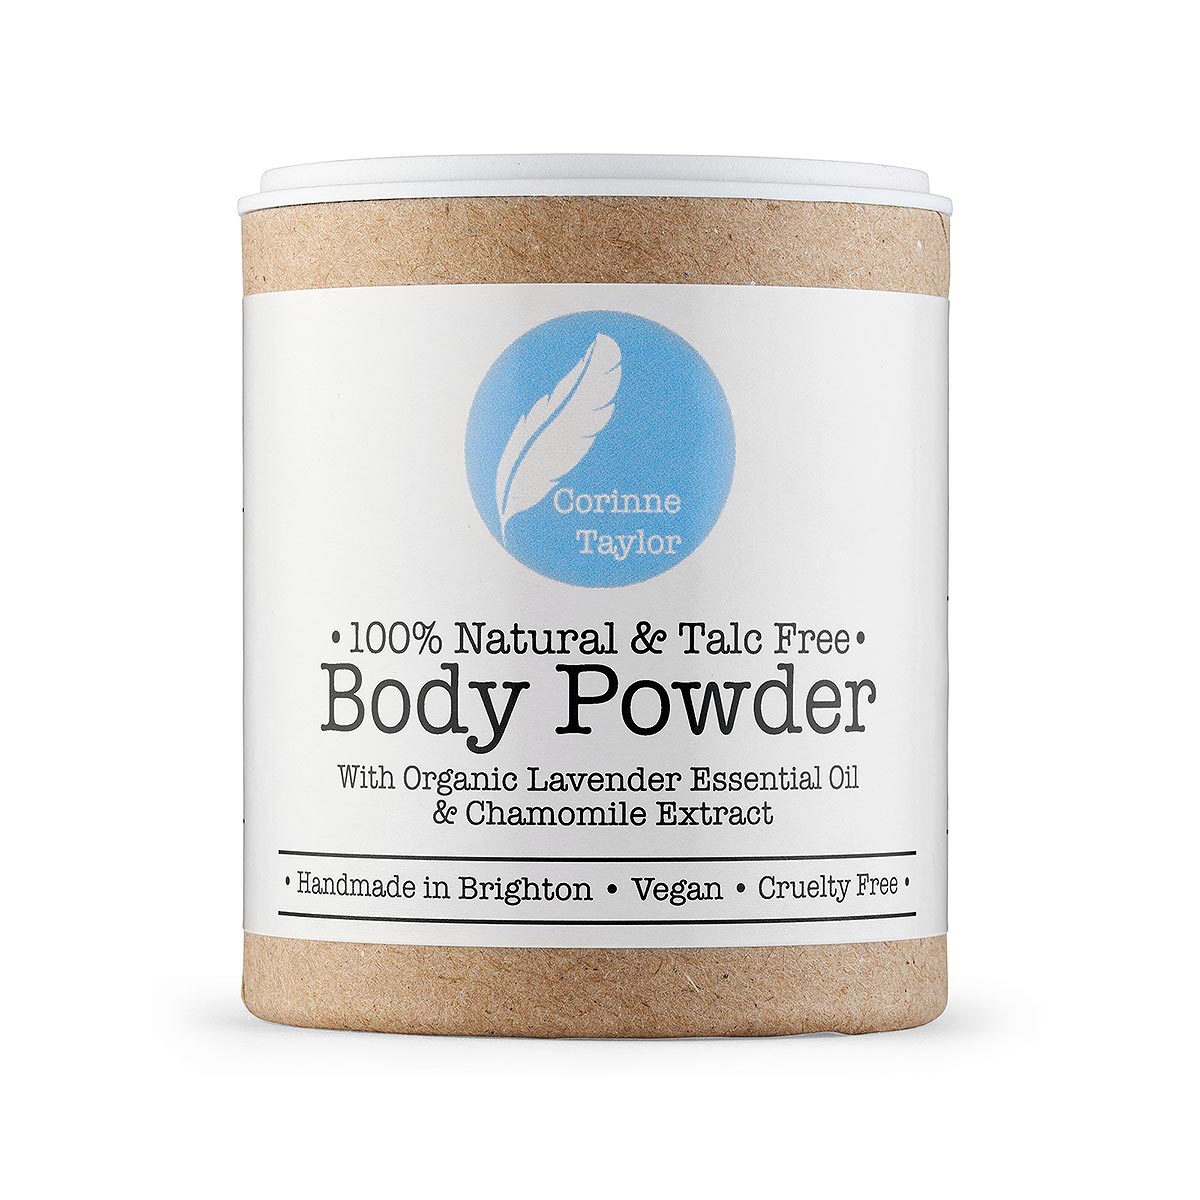 body powder in box on white background